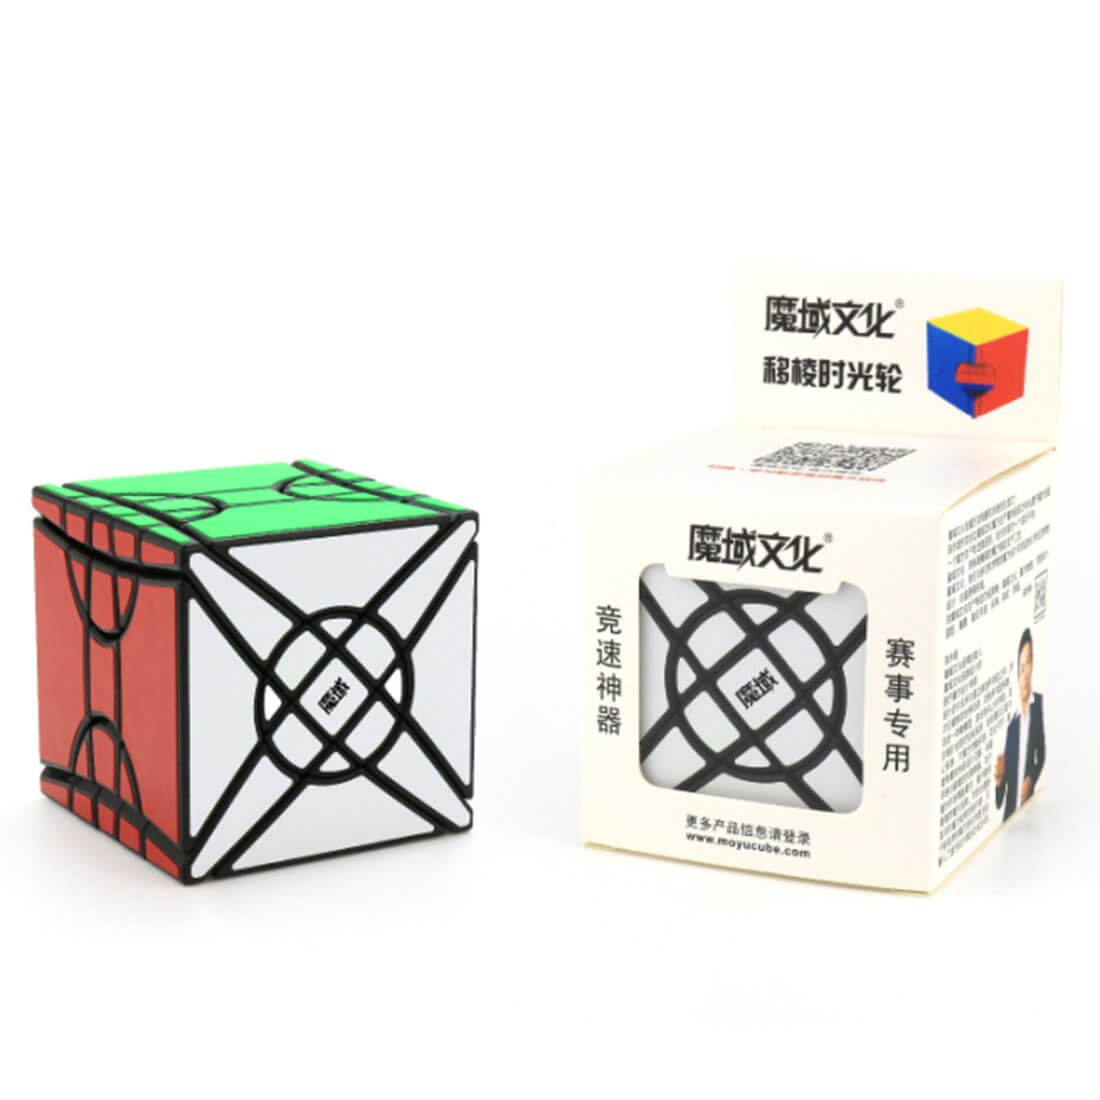 MoYu Crazy Fisher Cube 3x3x3 Speed Cube 57mm